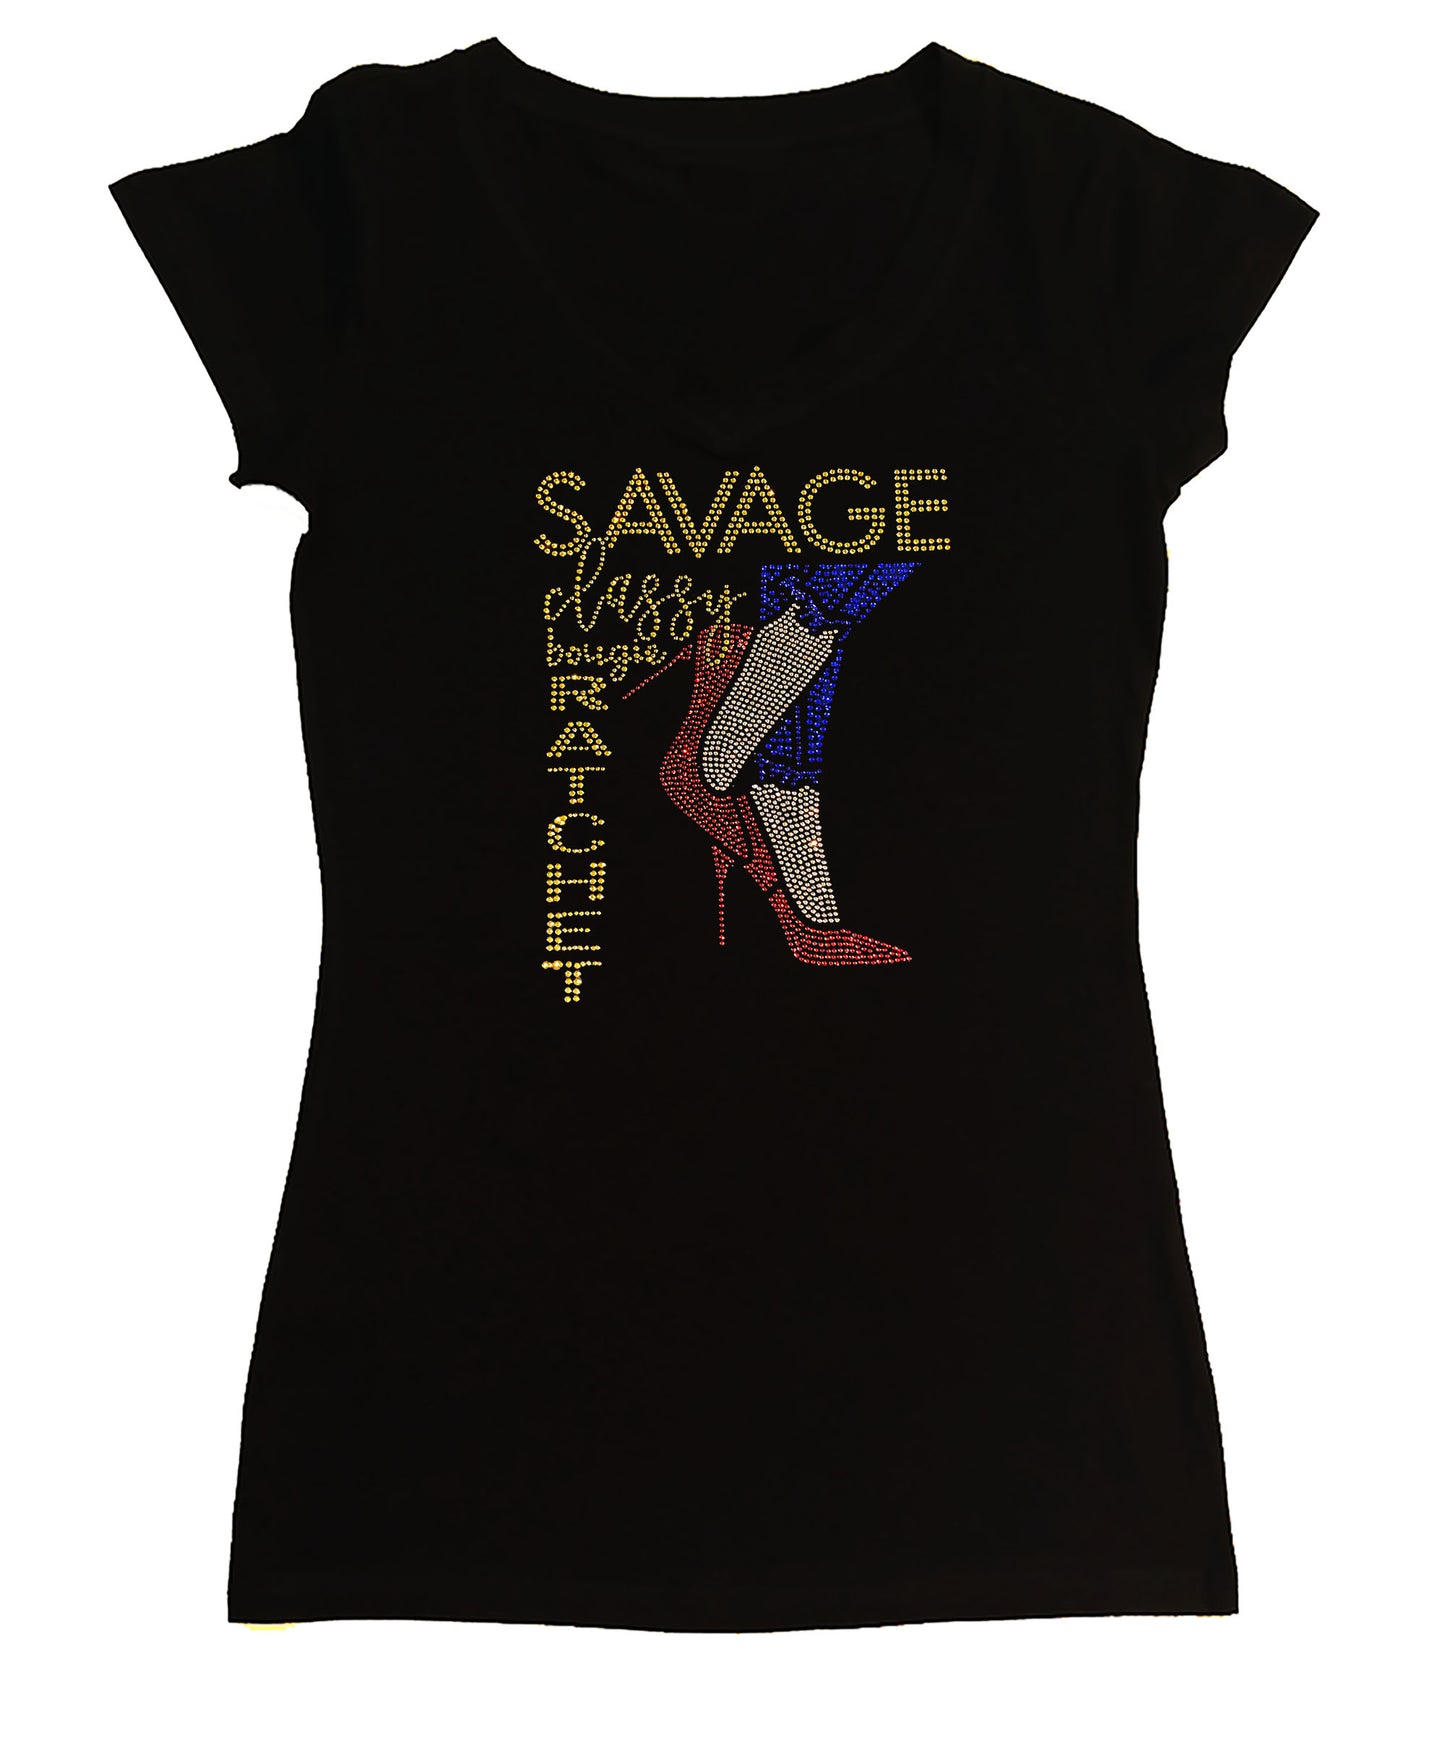 Women's Rhinestone Fitted Tight Snug Shirt Savage, Classy, Bougie, Ratchet